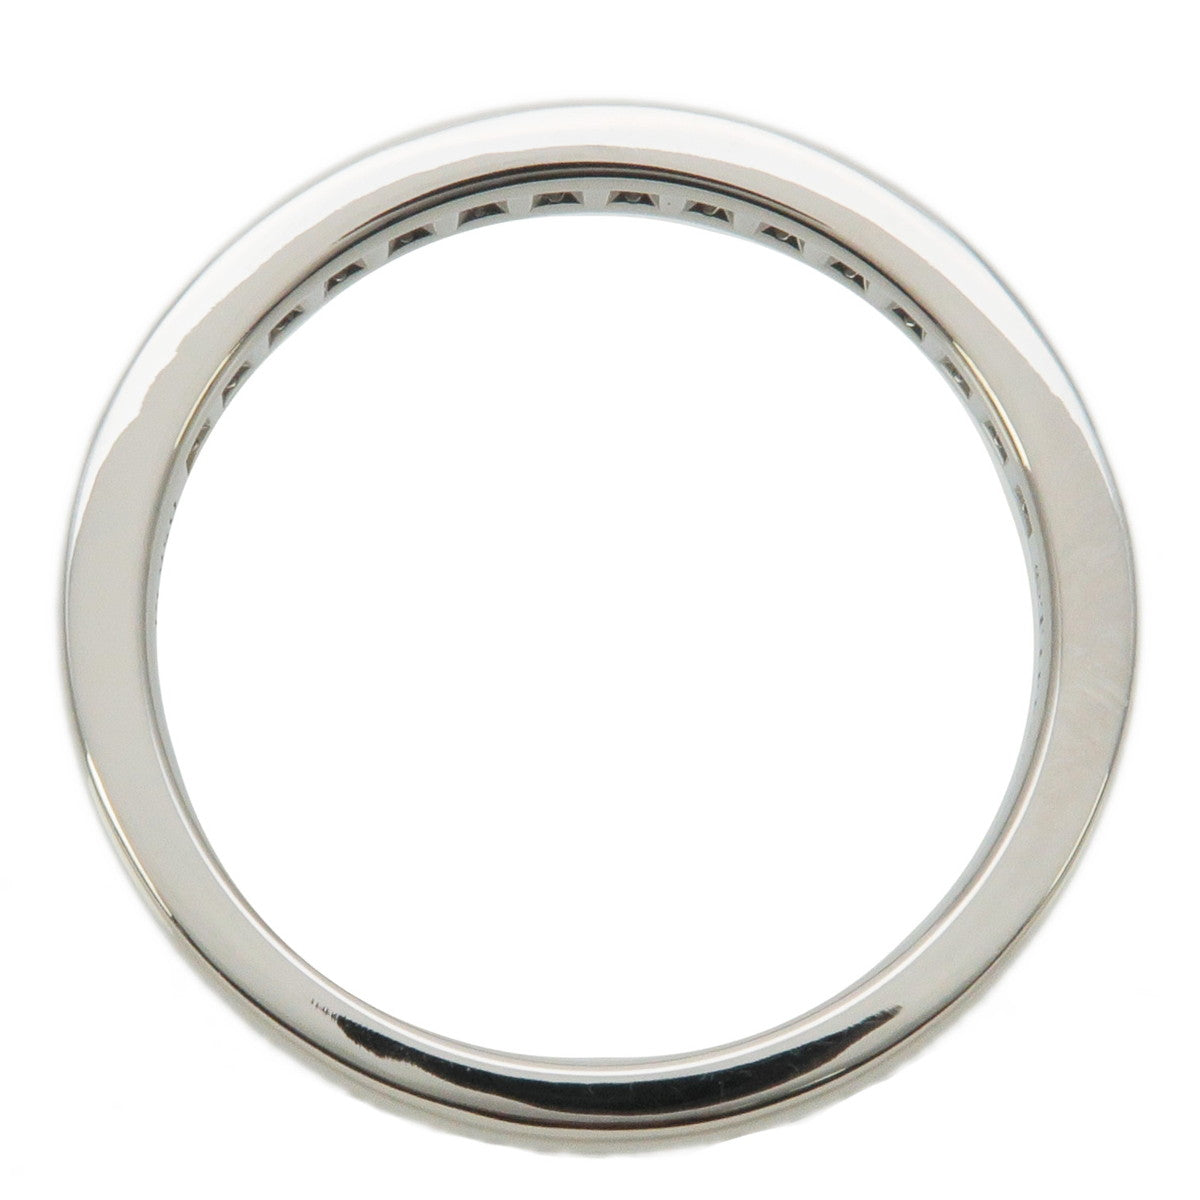 Tiffany&Co. Half Circle Channel-set Diamond Ring Platinum US4-4.5